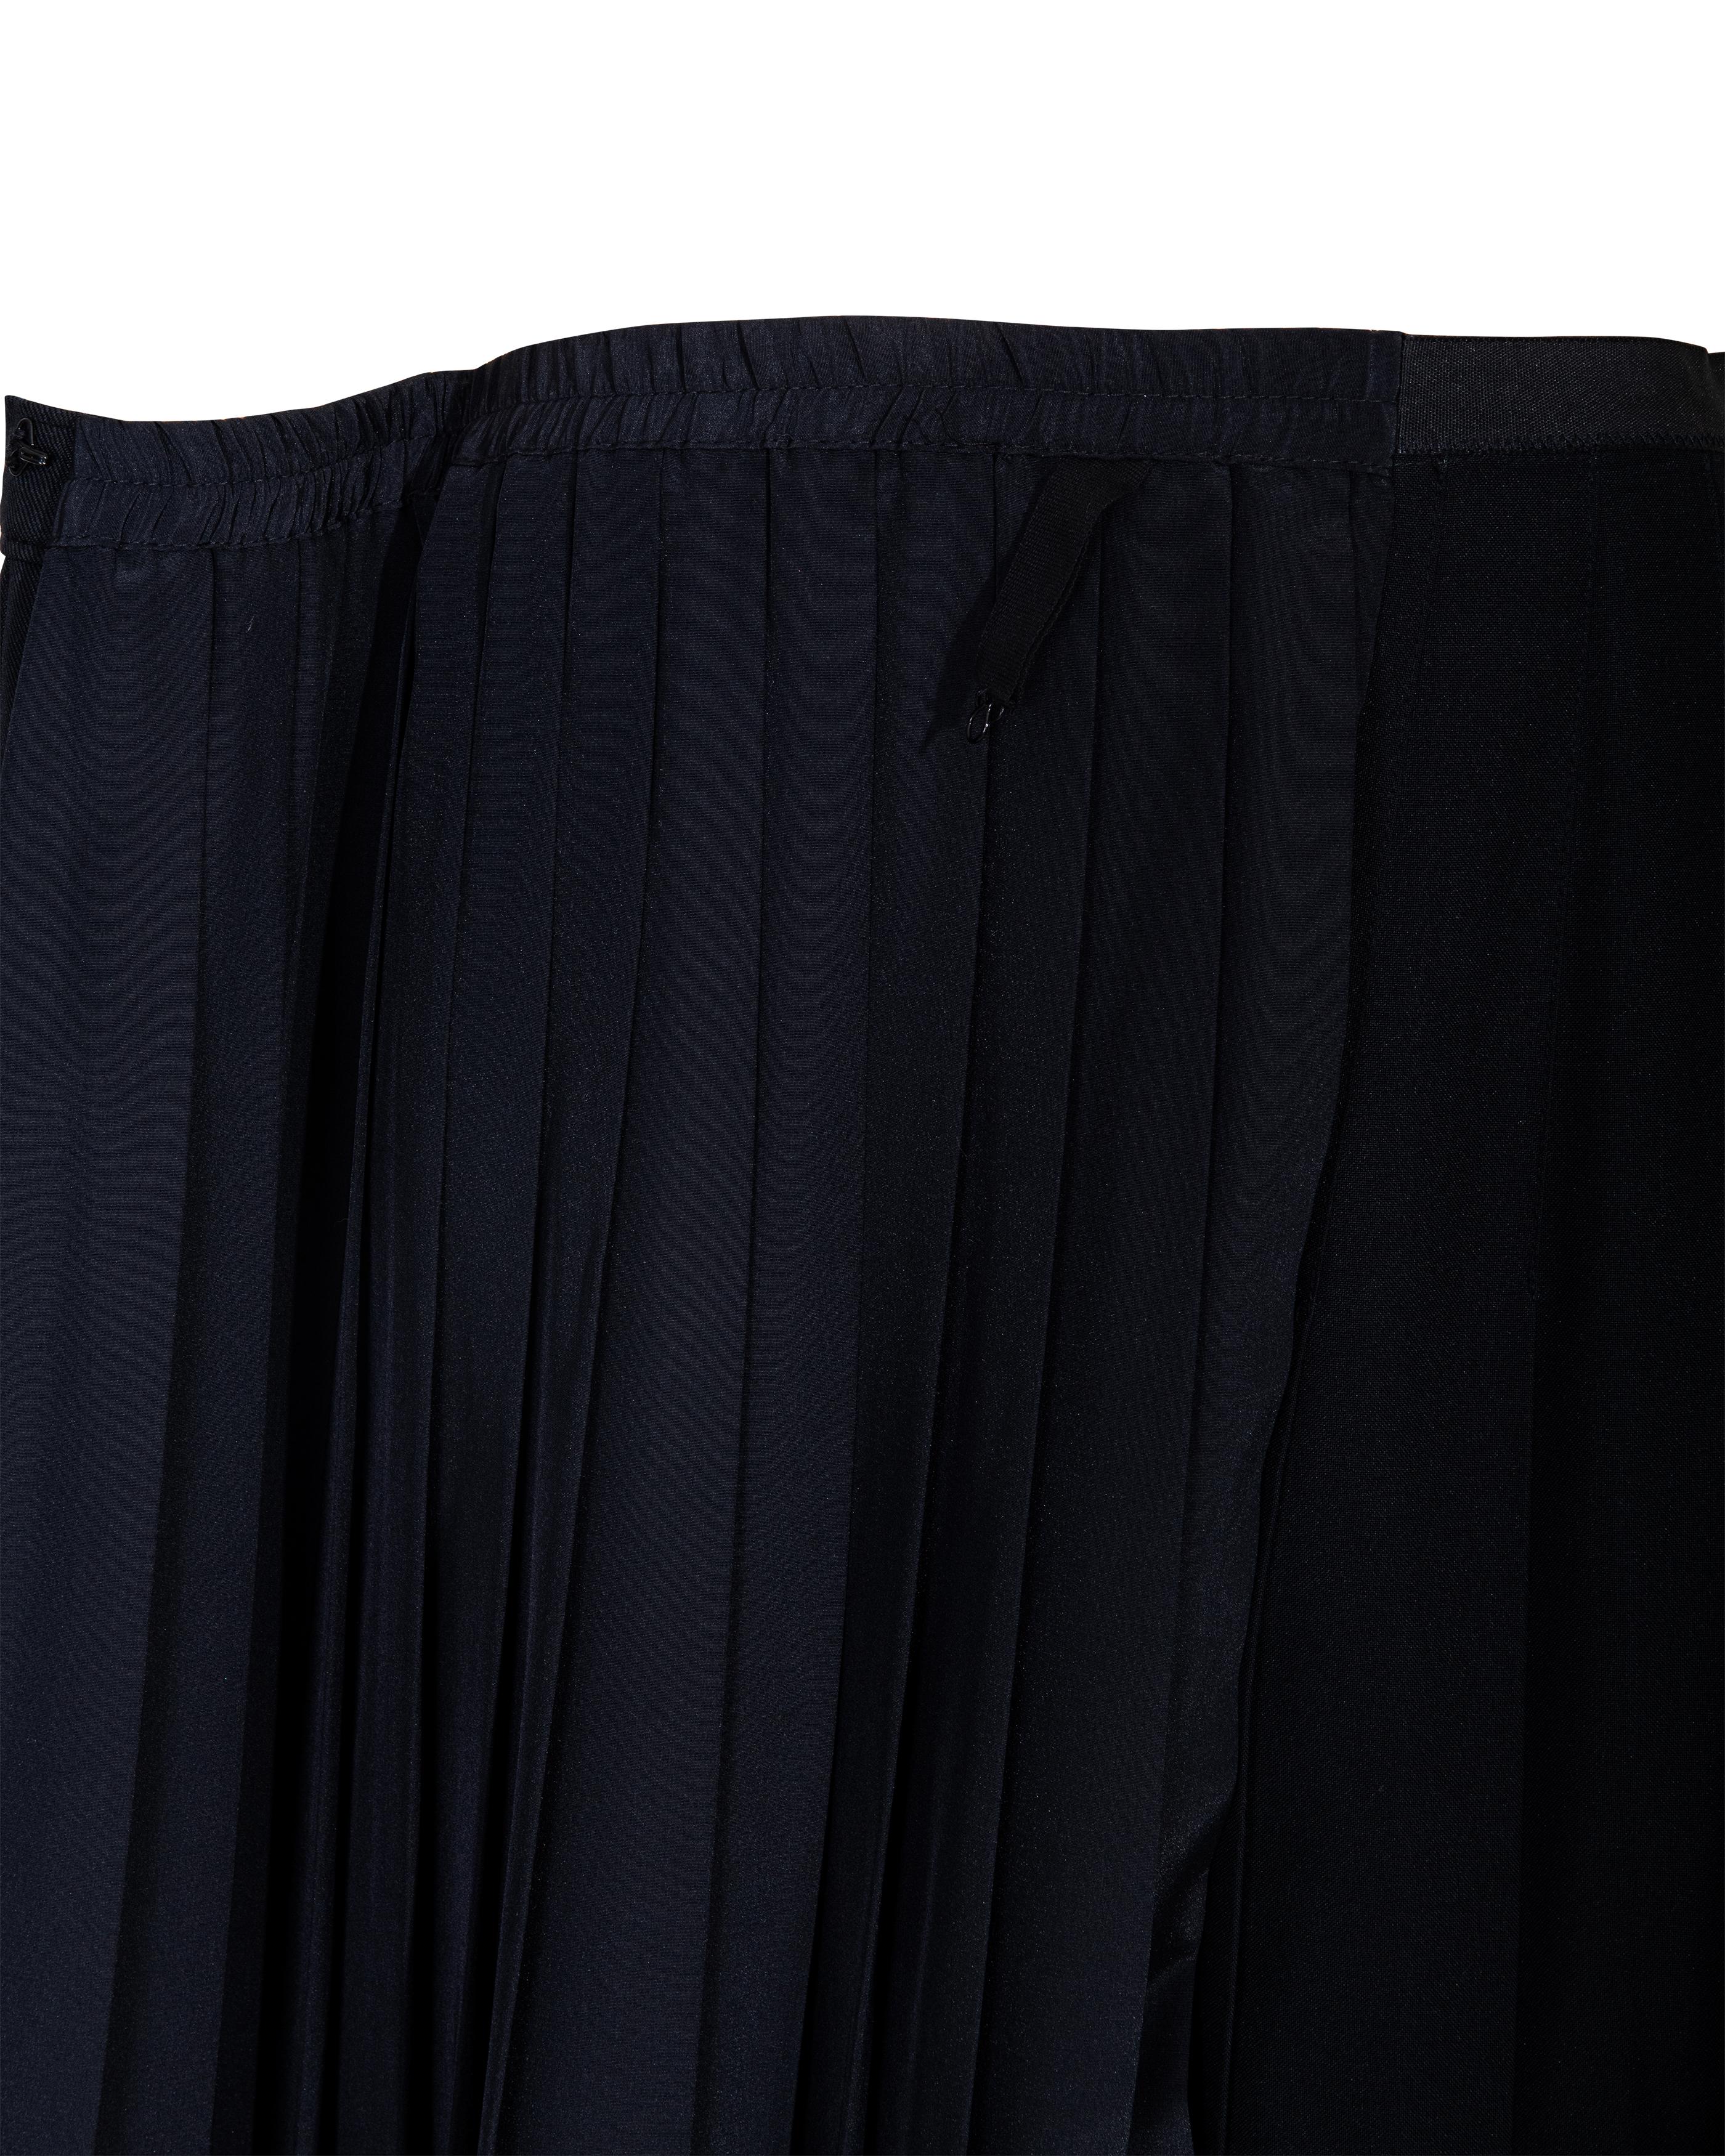 S/S 2001 Maison Martin Margiela One-of-One Black Pleated Artisanal Maxi Skirt For Sale 4